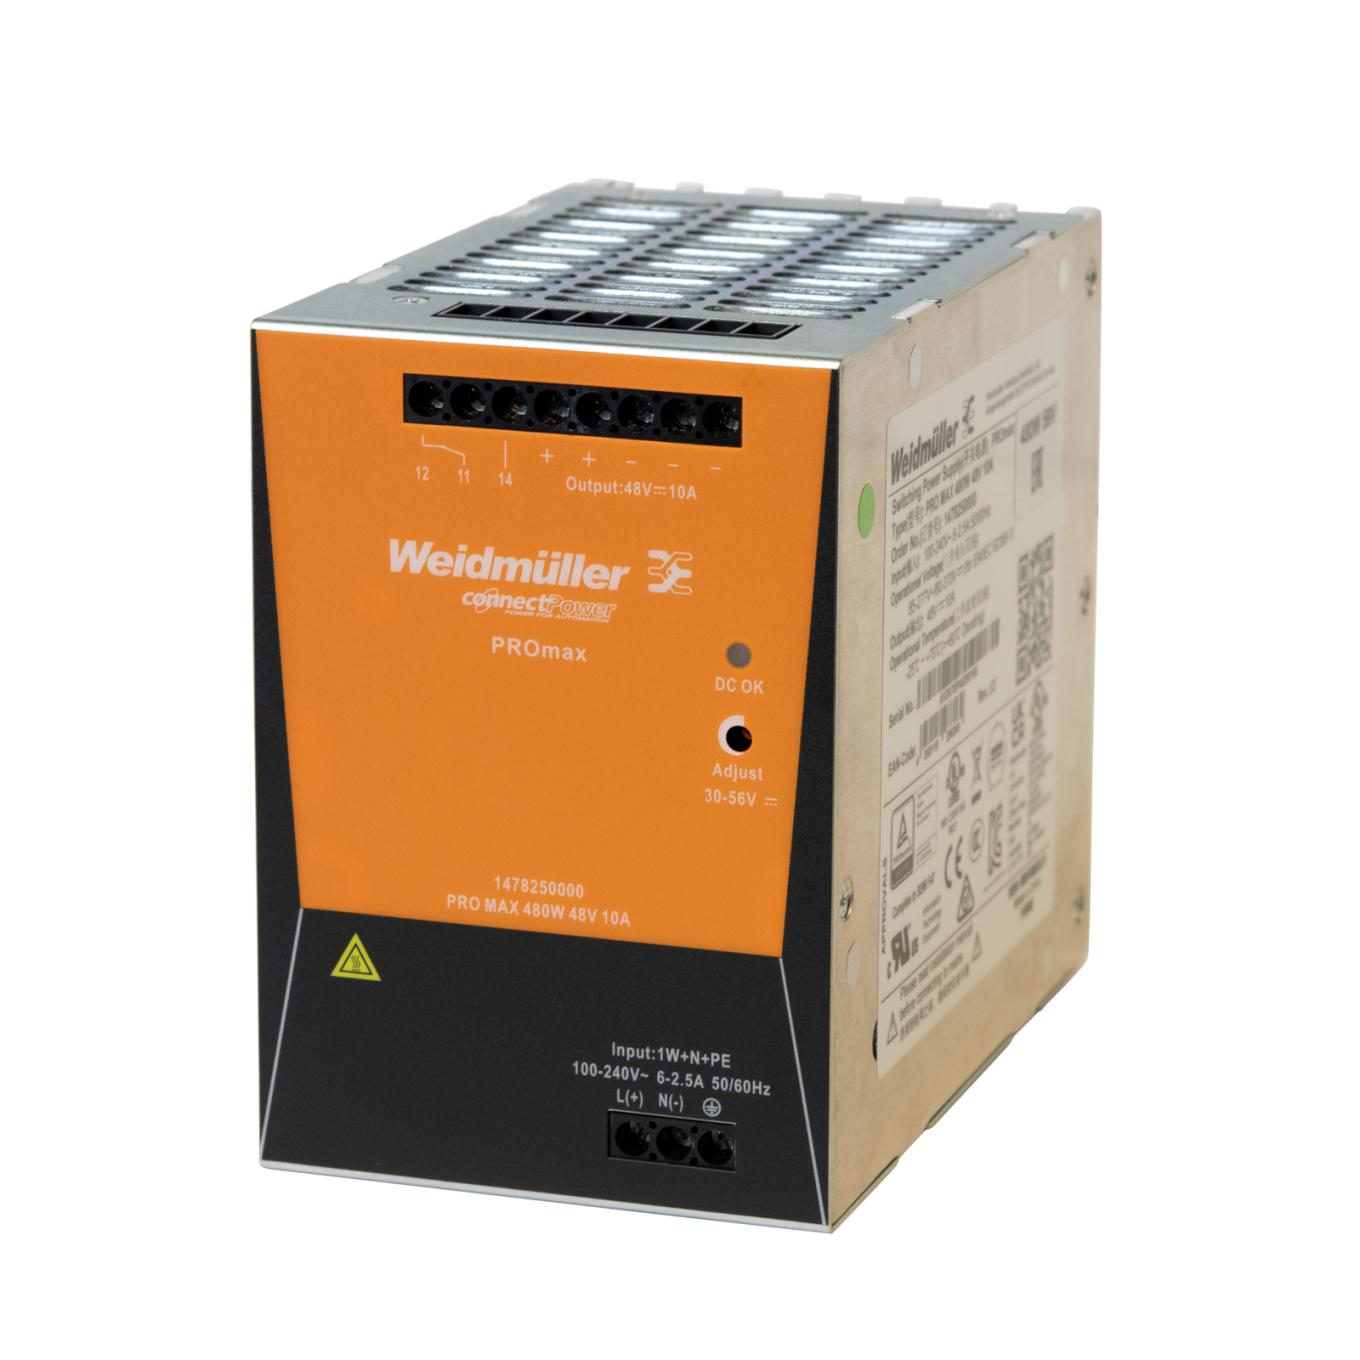 AXIS Power supply DIN PS56, orange box.